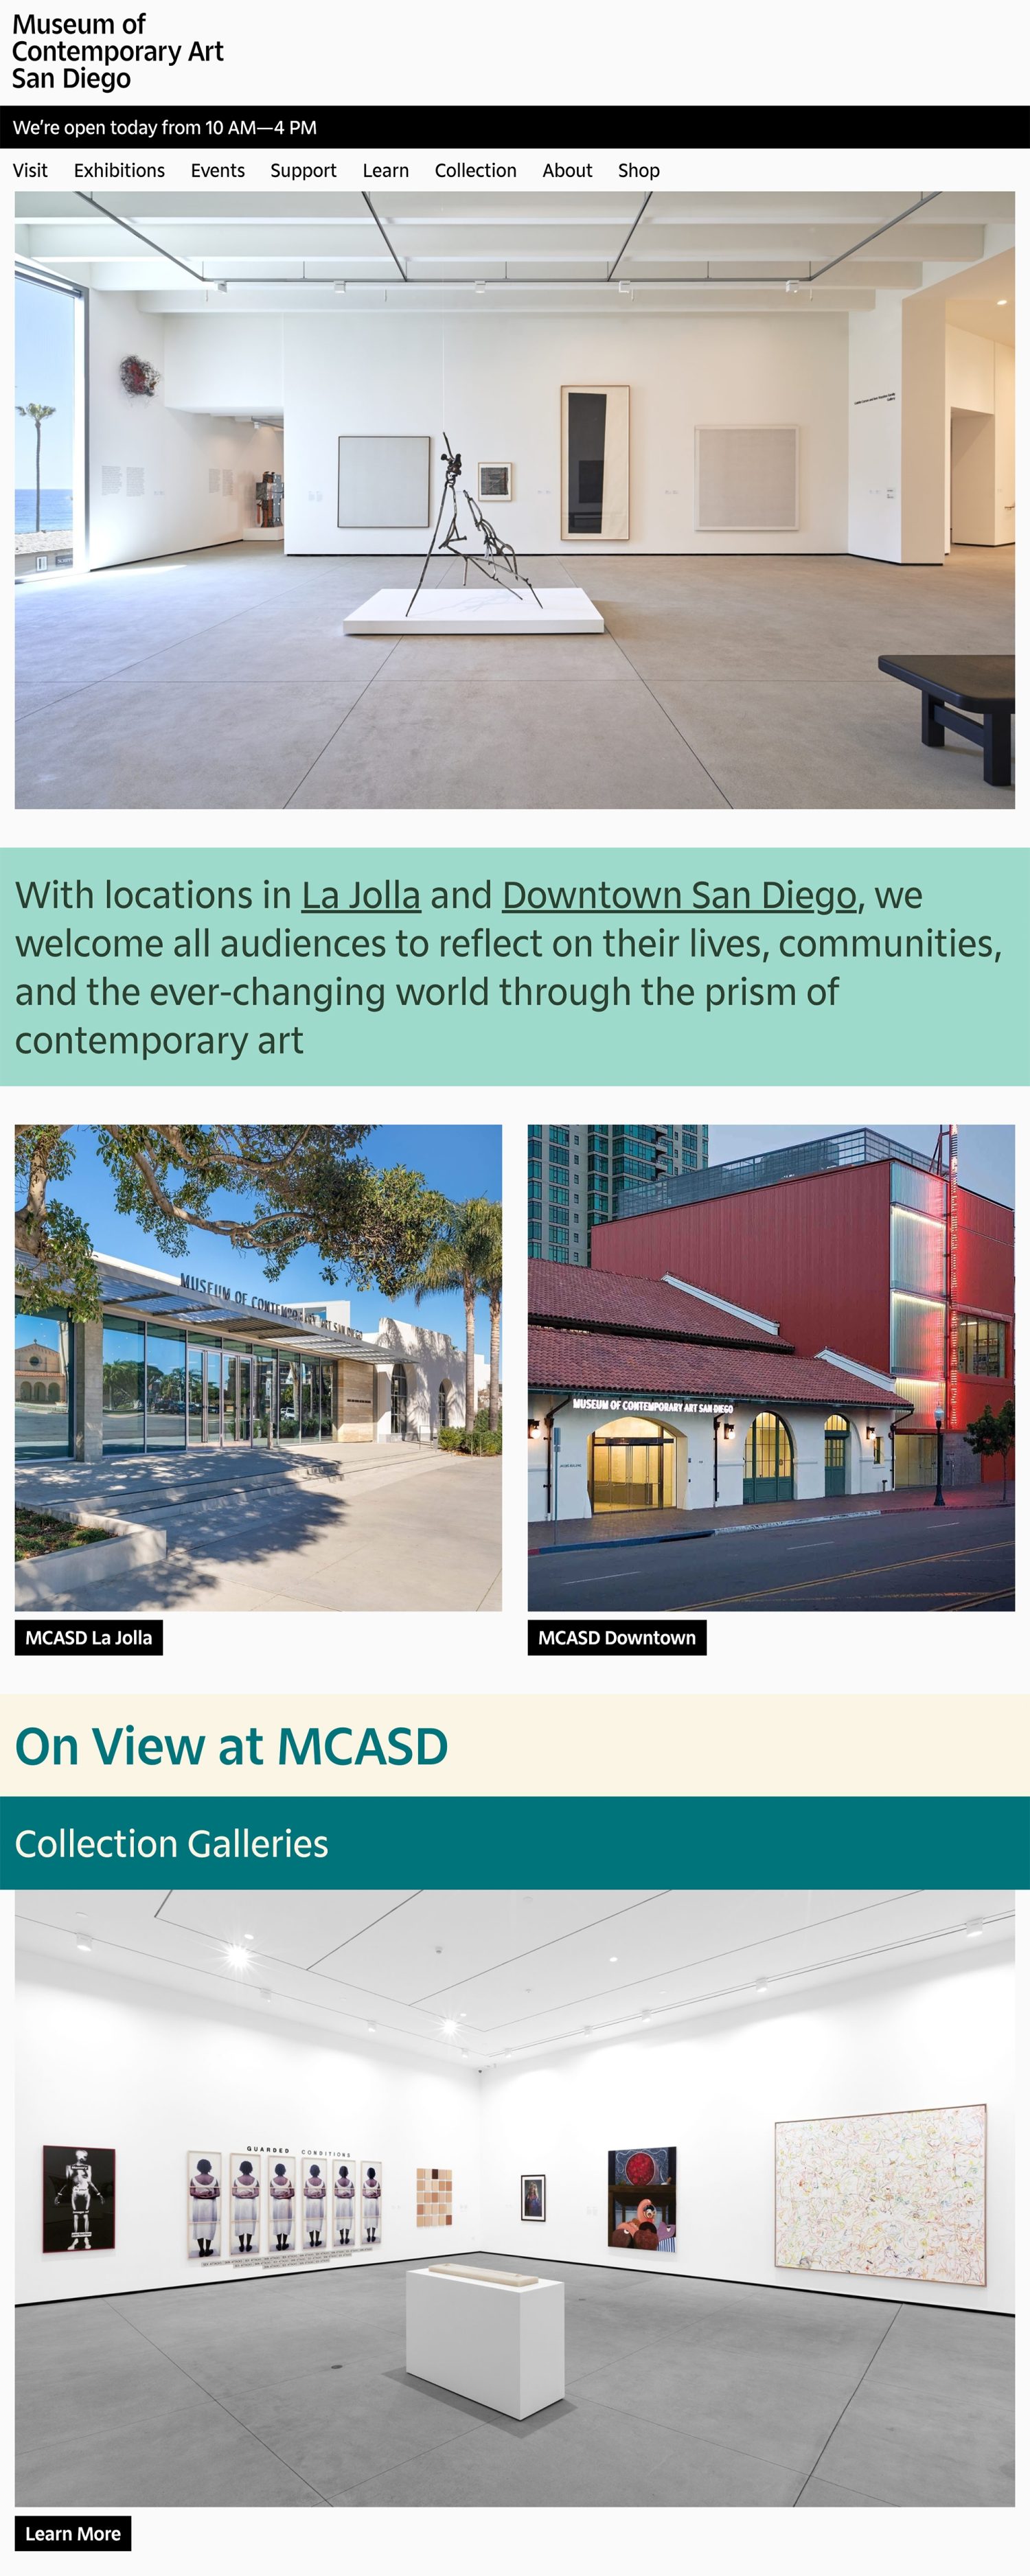 Screenshot of a Museum of Contemporary Art San Diego website homepage